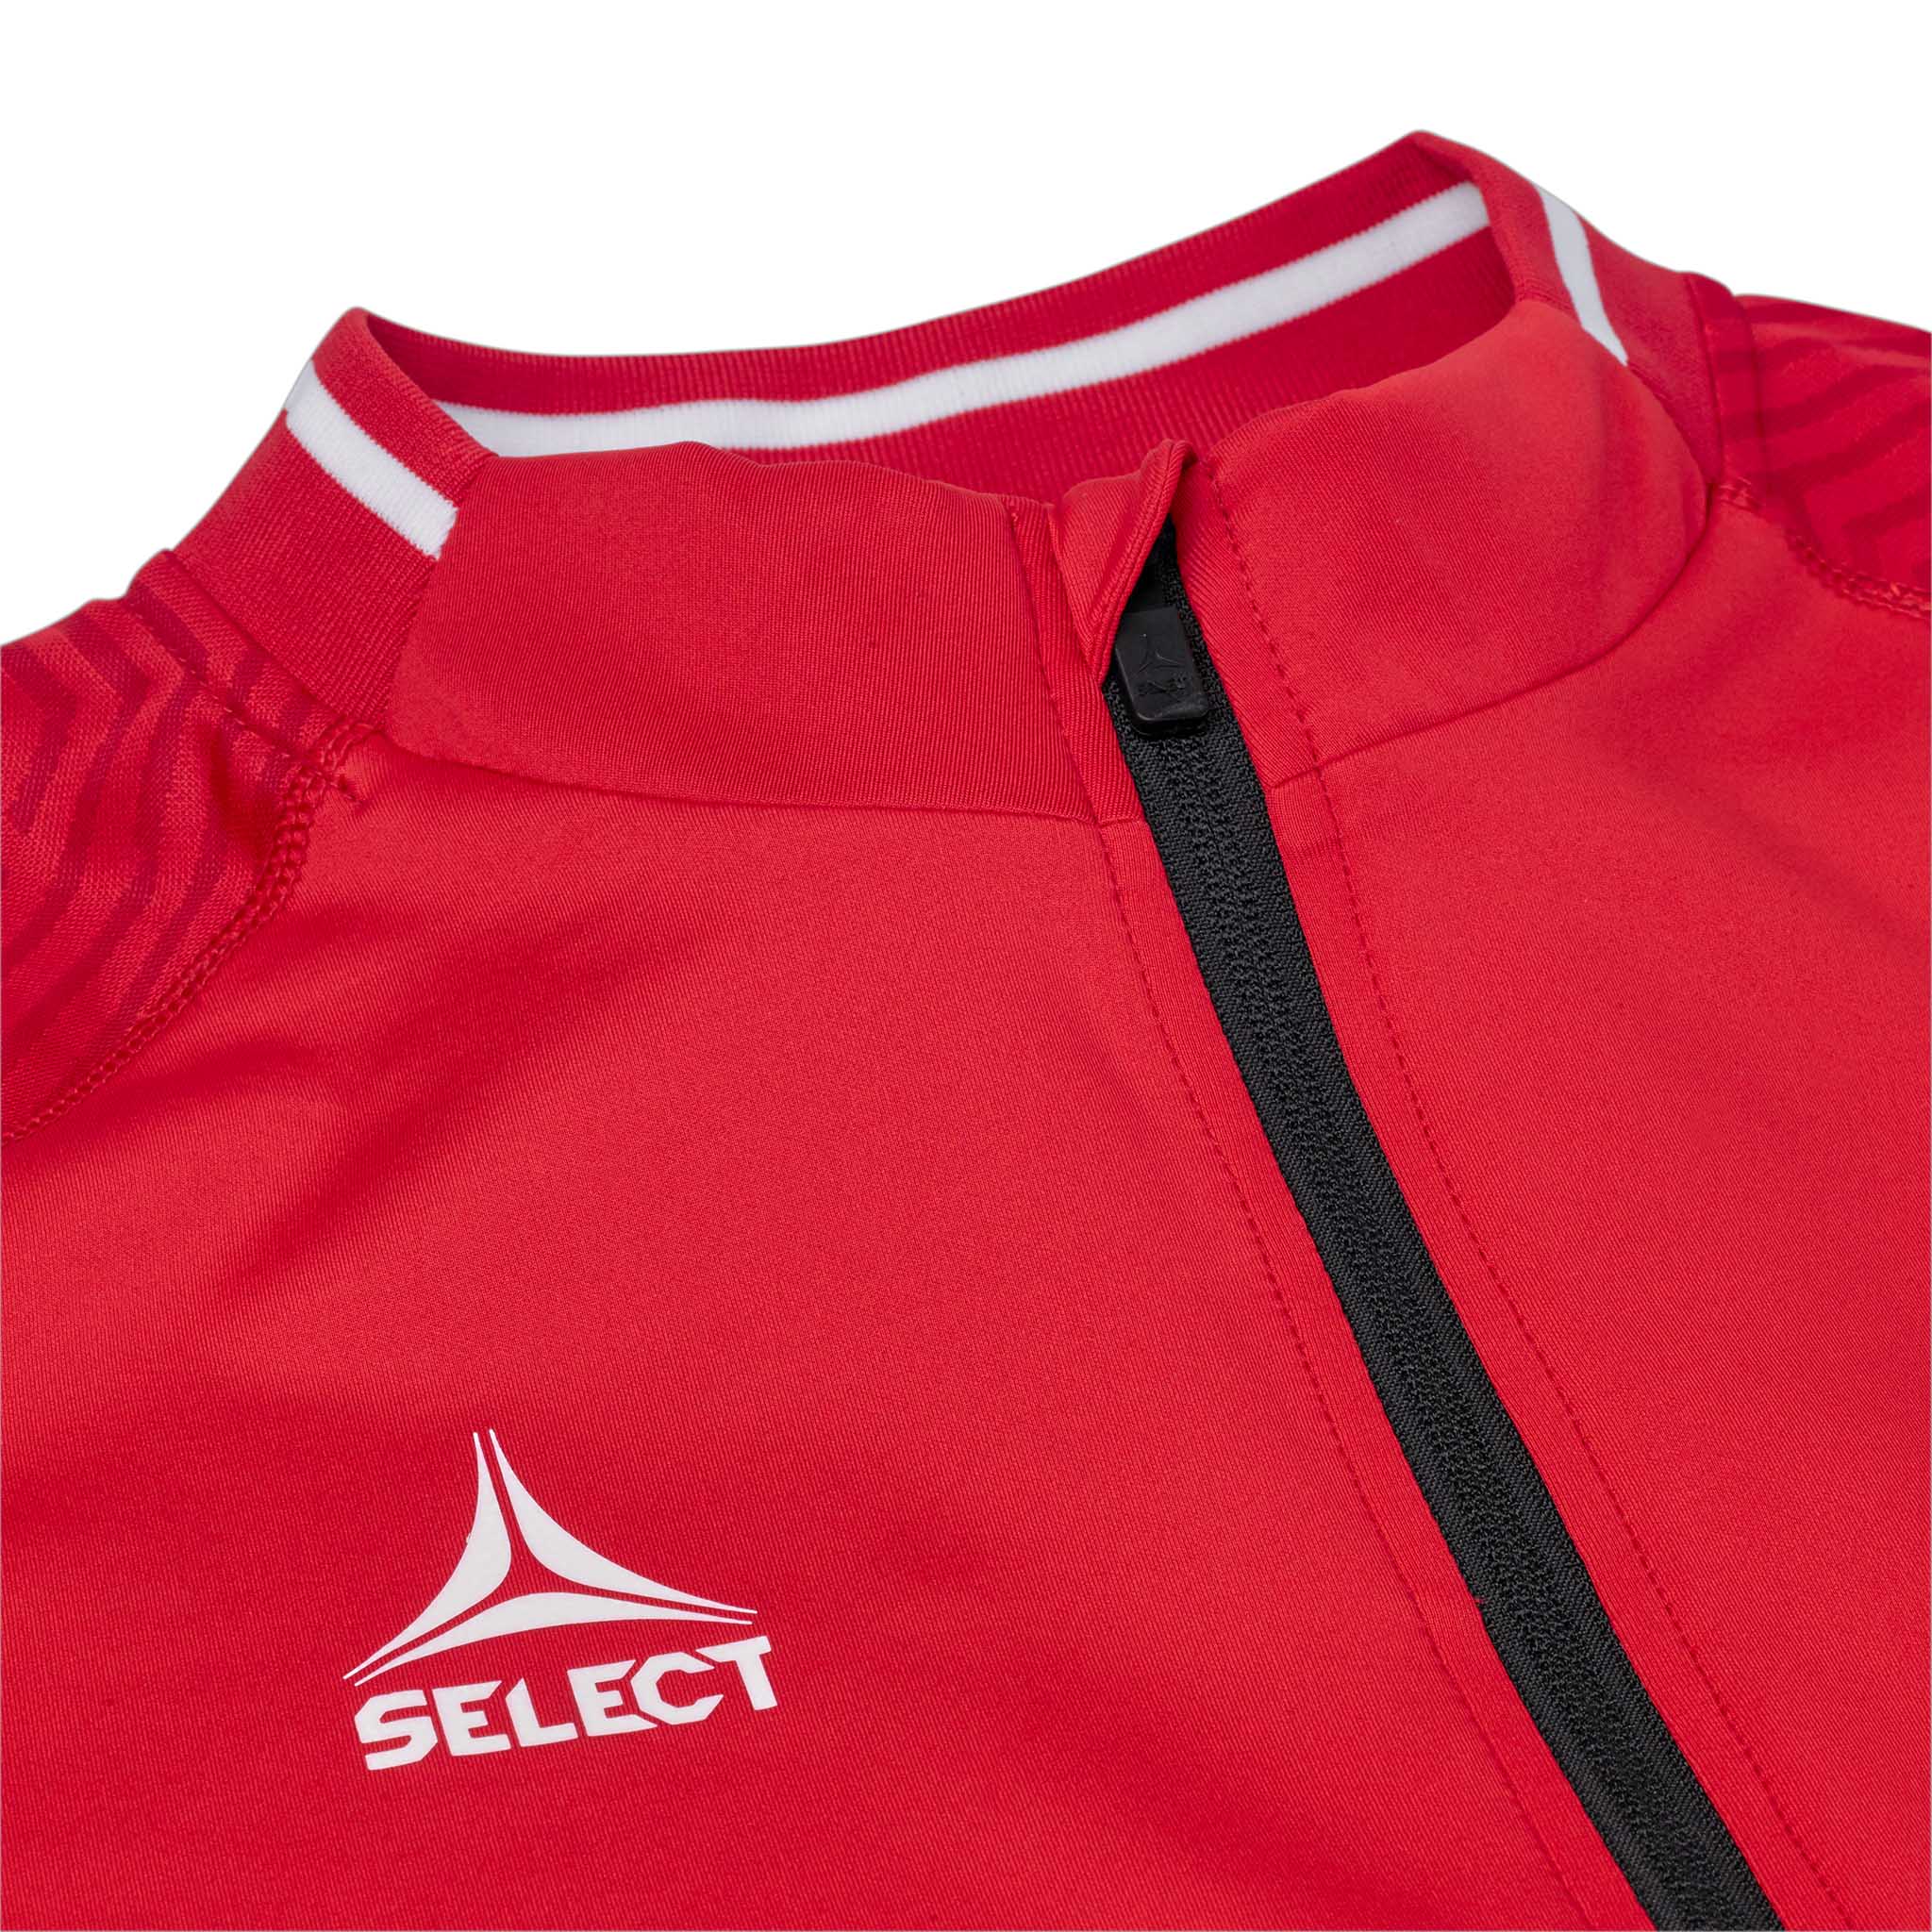 Monaco Treningssweatshirt 1/2 glidelås #farge_rød/hvit